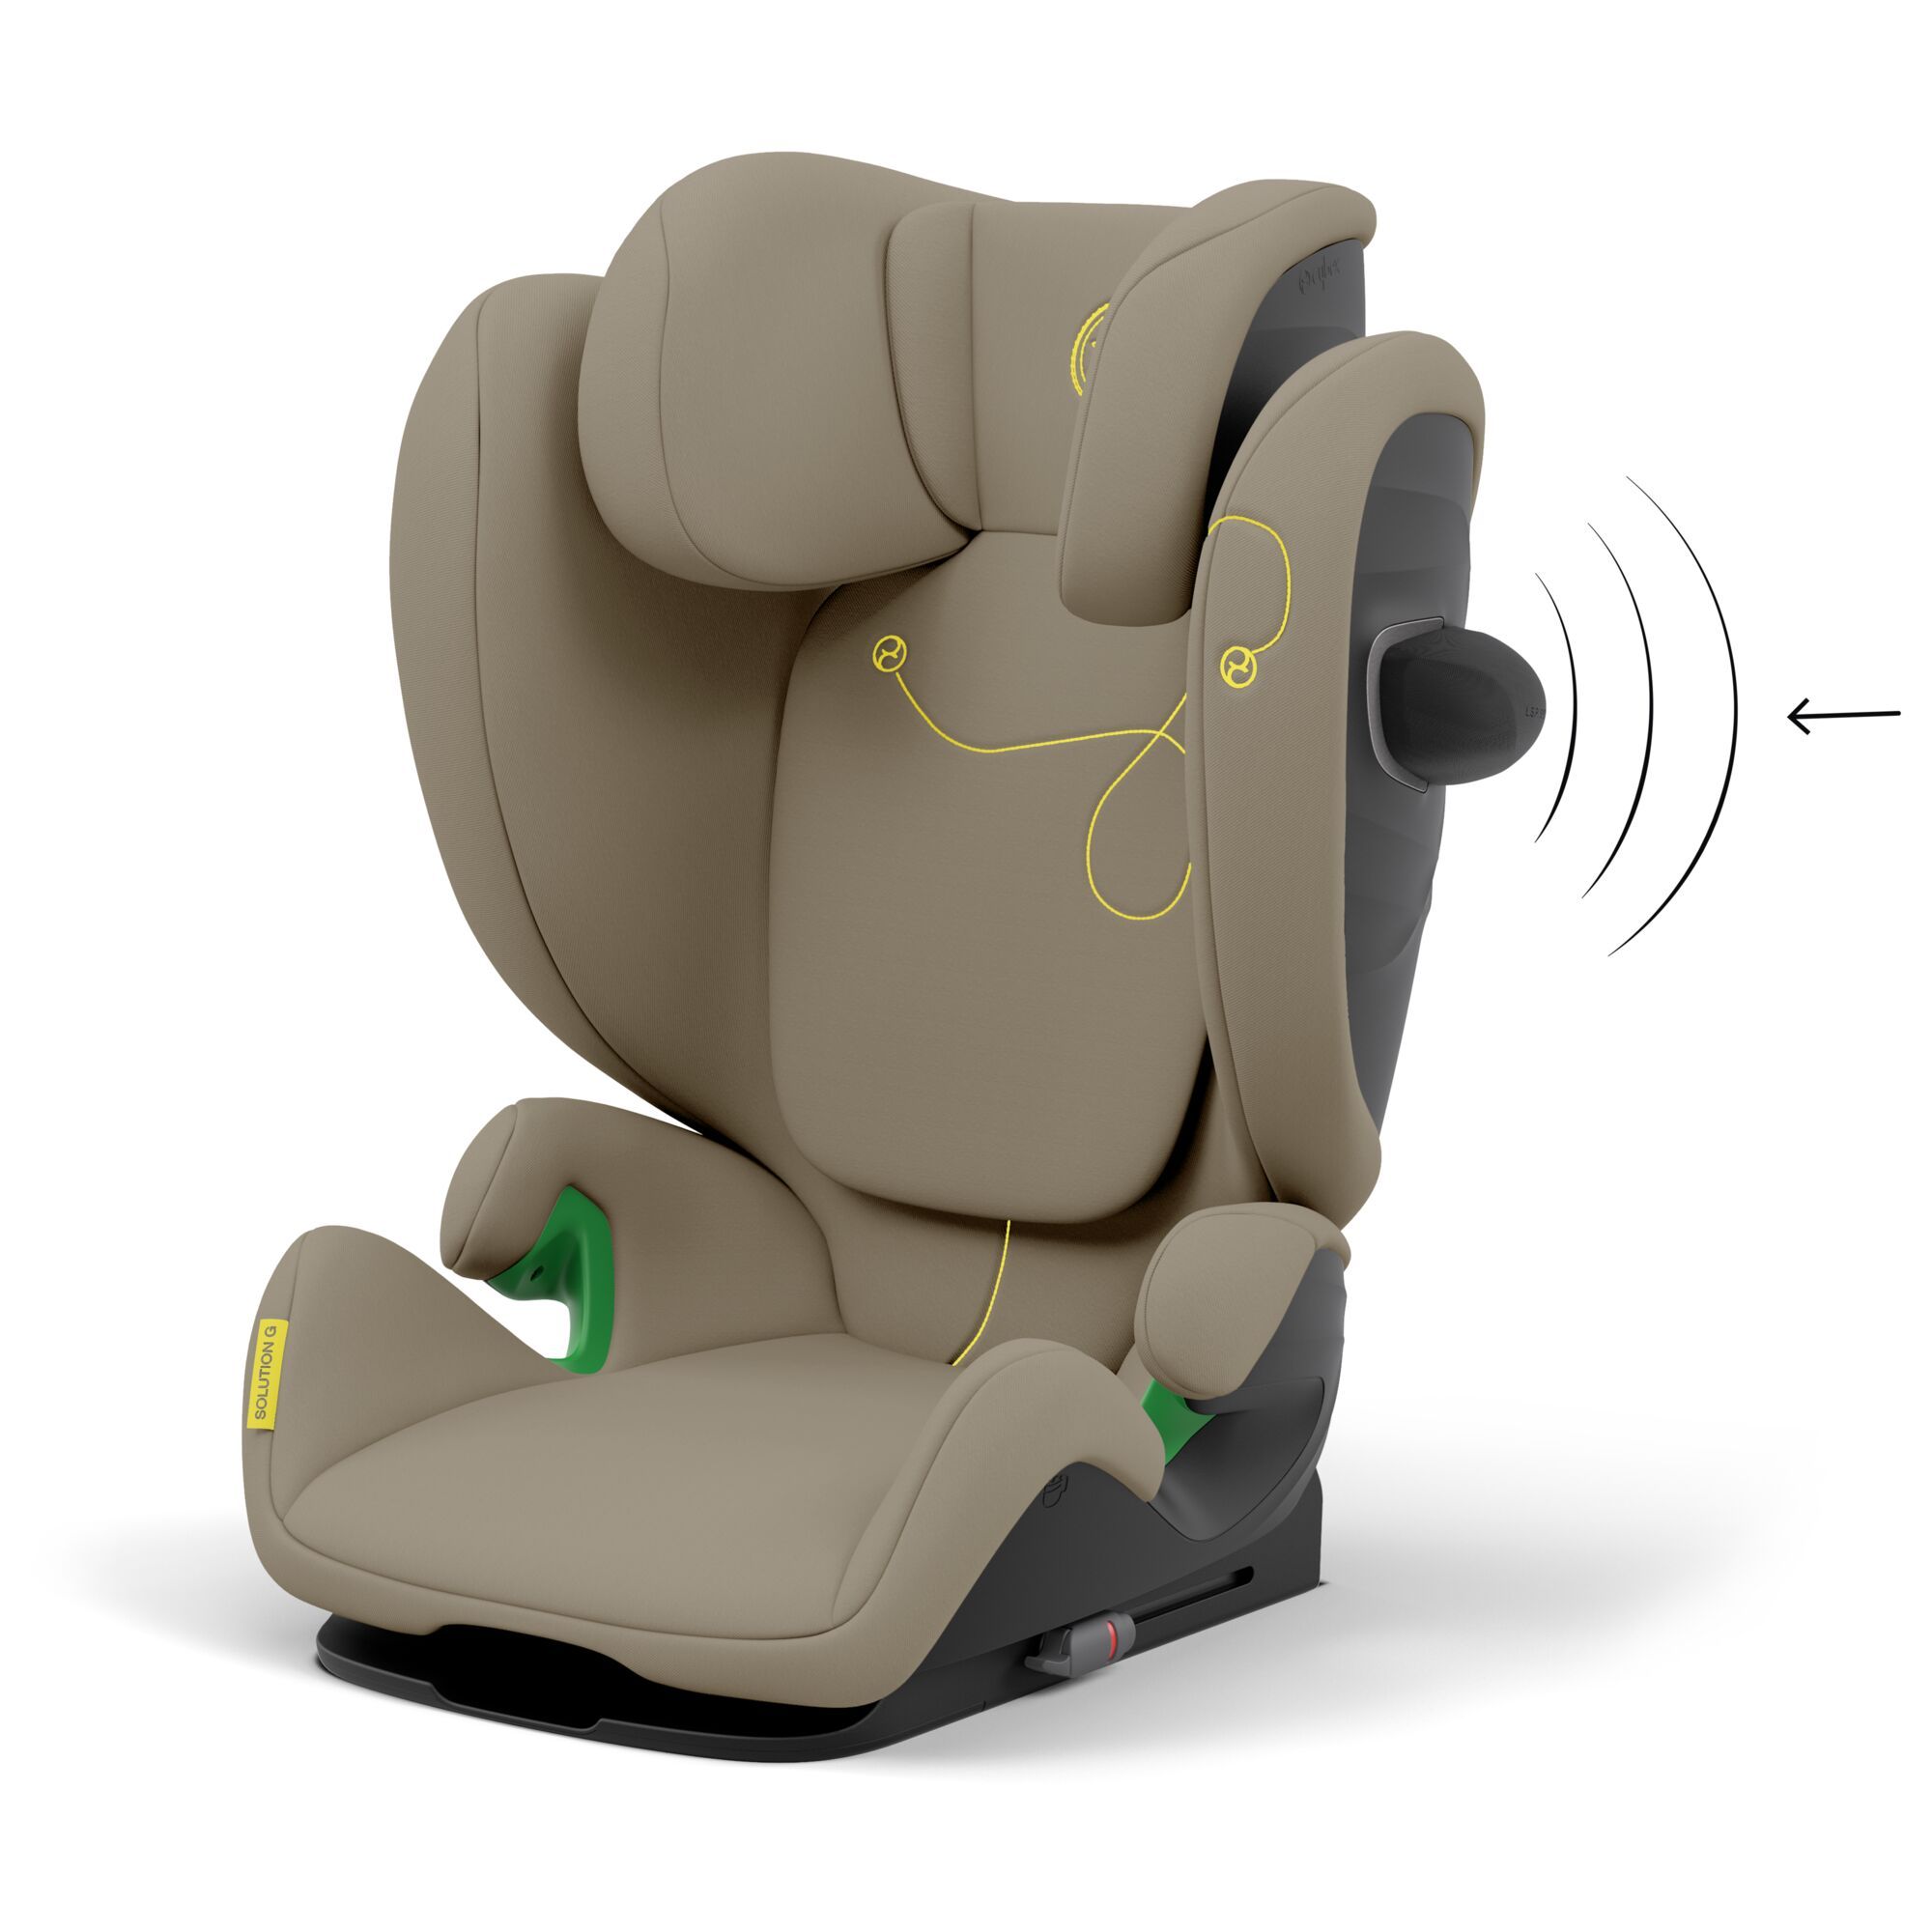 Cybex Solution M-fix 15-36 kg Kindersitz